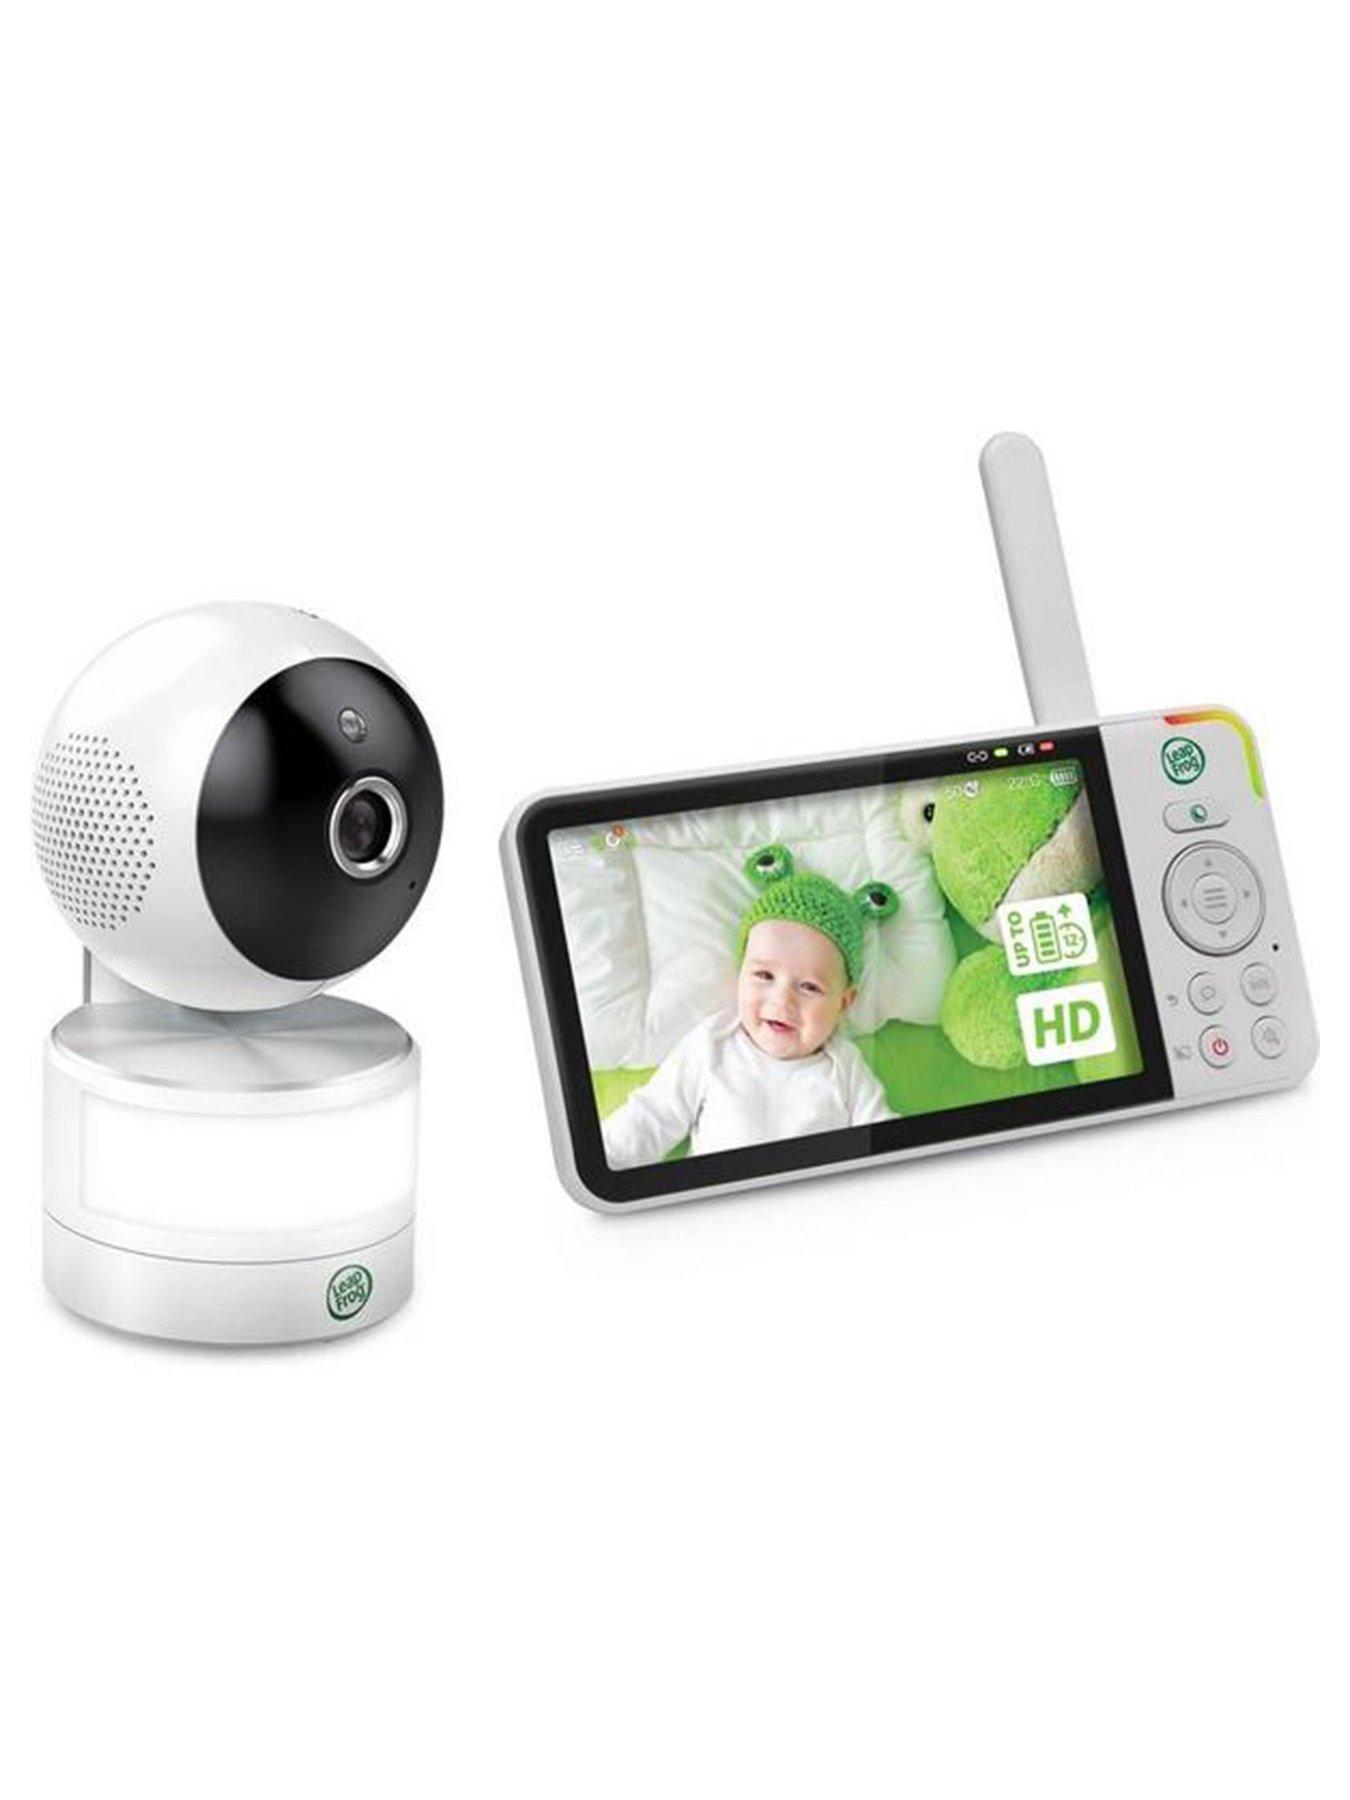 360° YOO Moov Motorised Video Baby Monitor